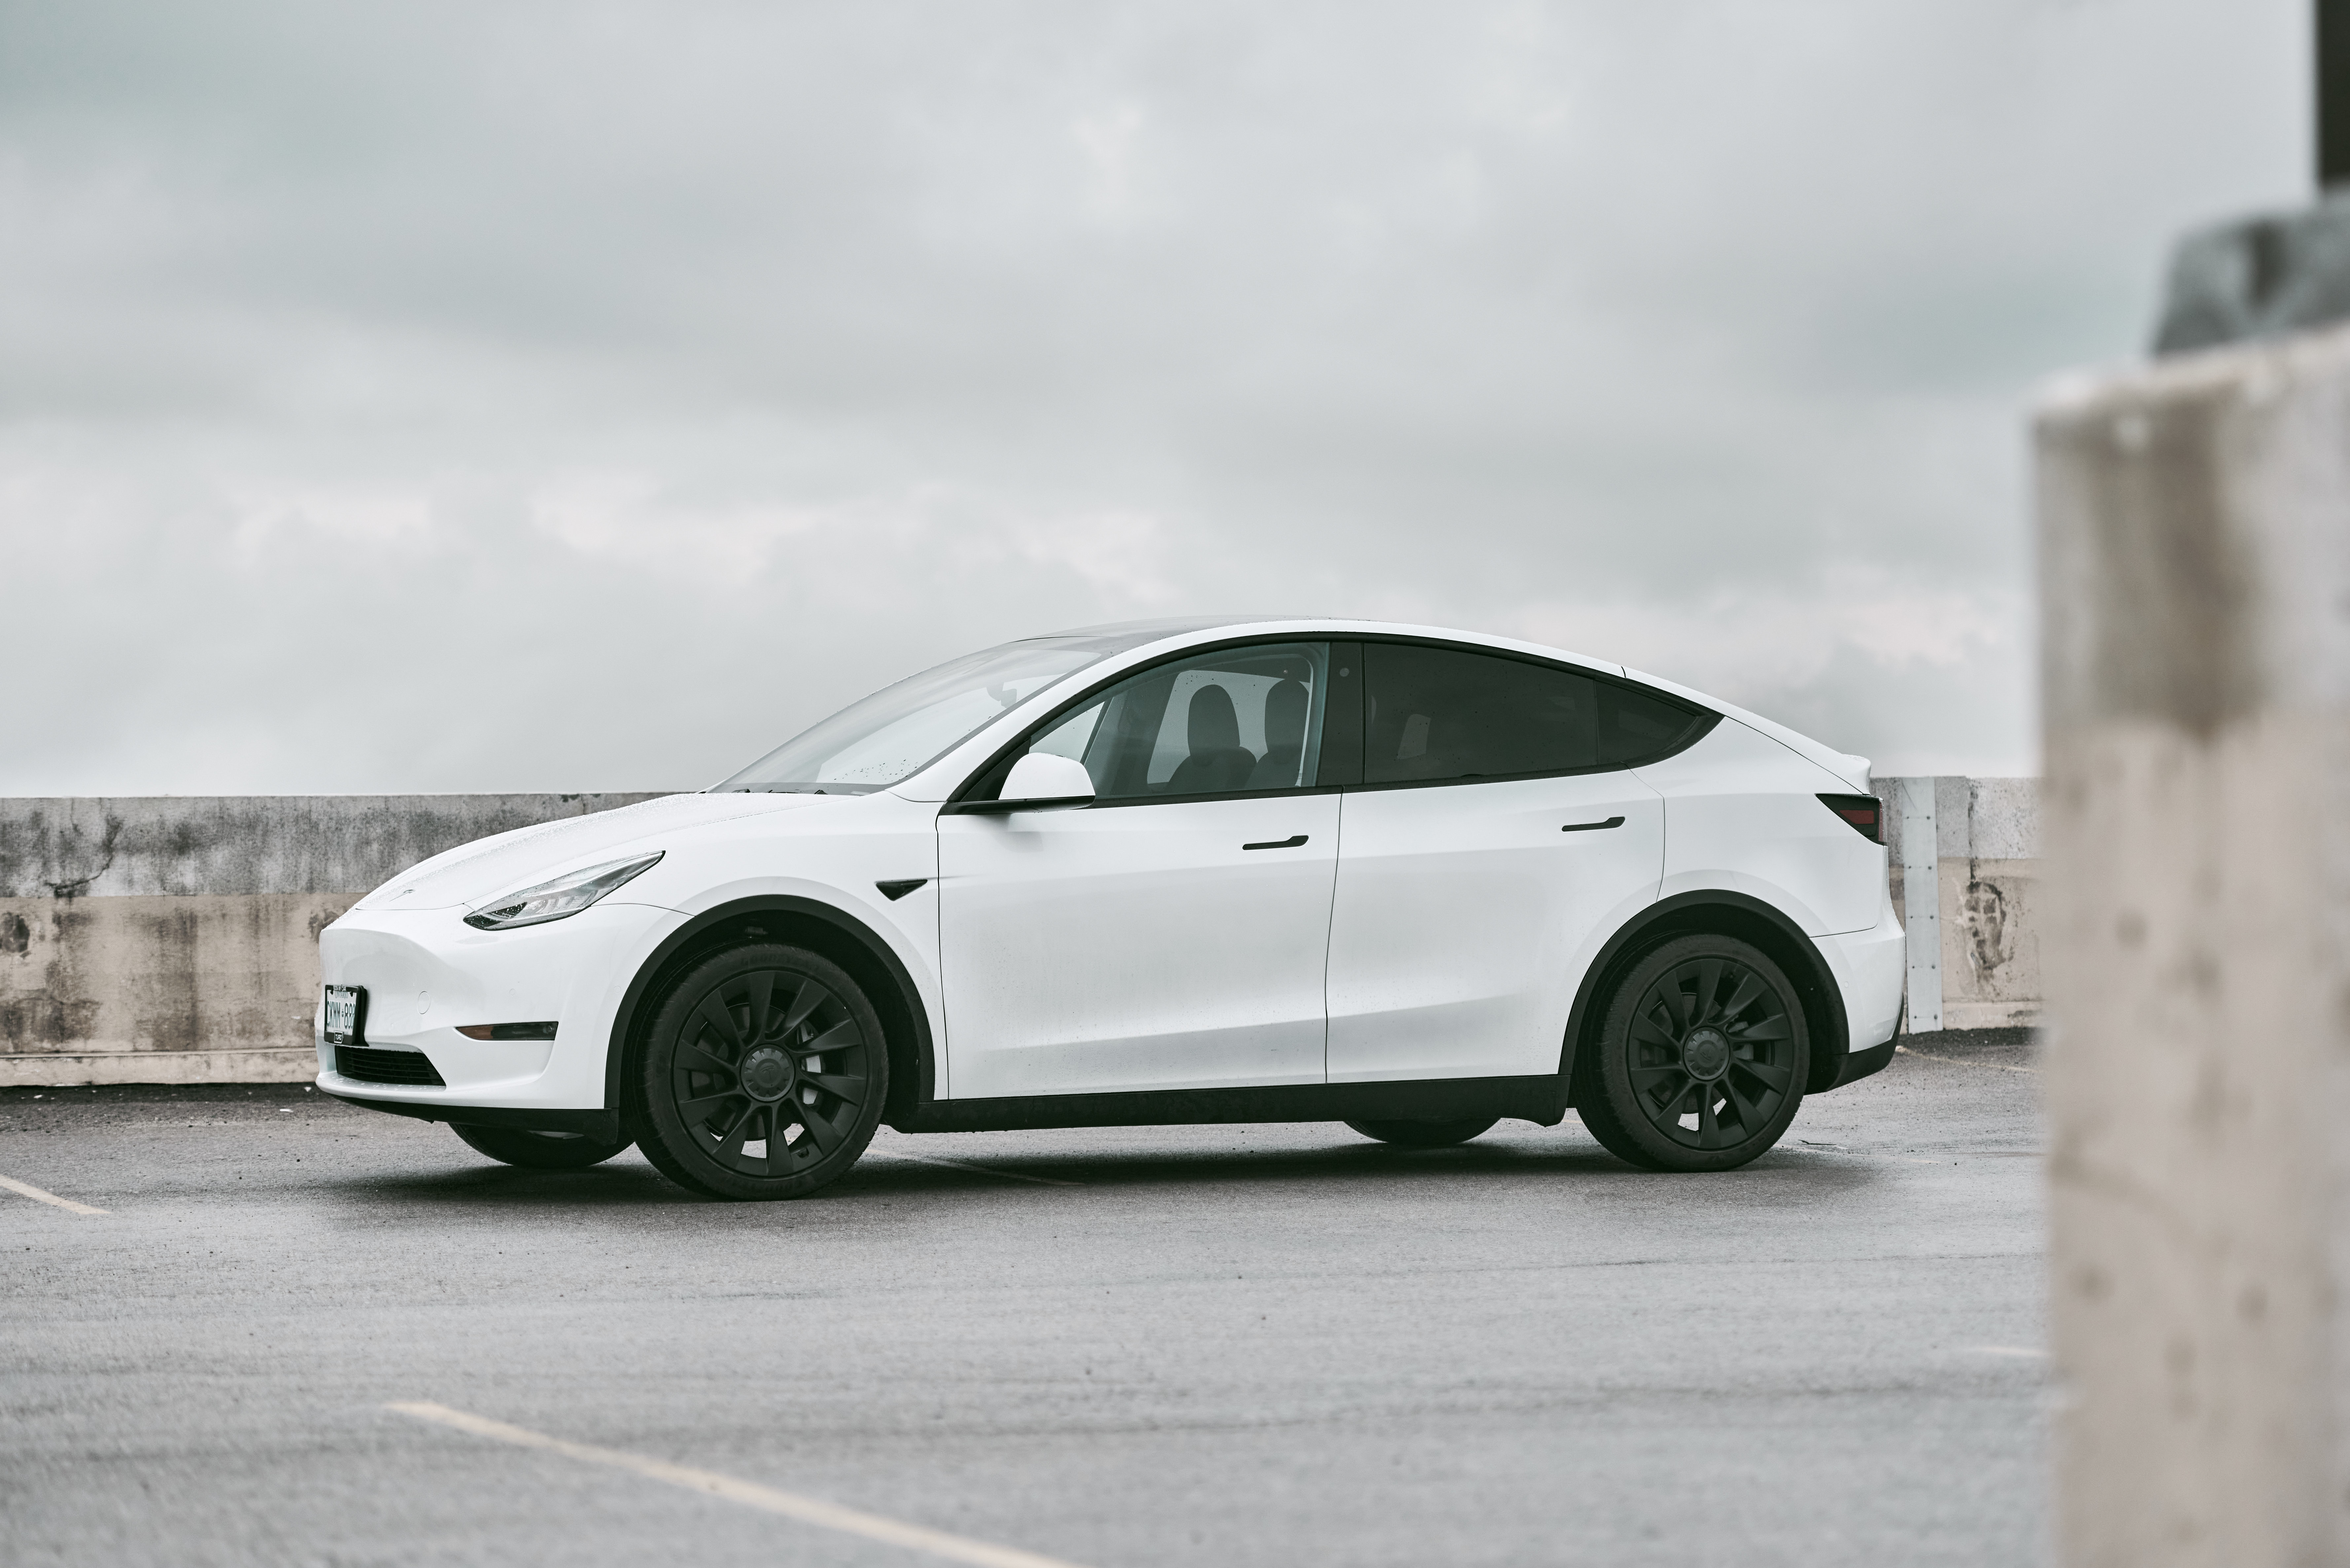 This Tesla Model Y looks like it belongs in Fast and Furious